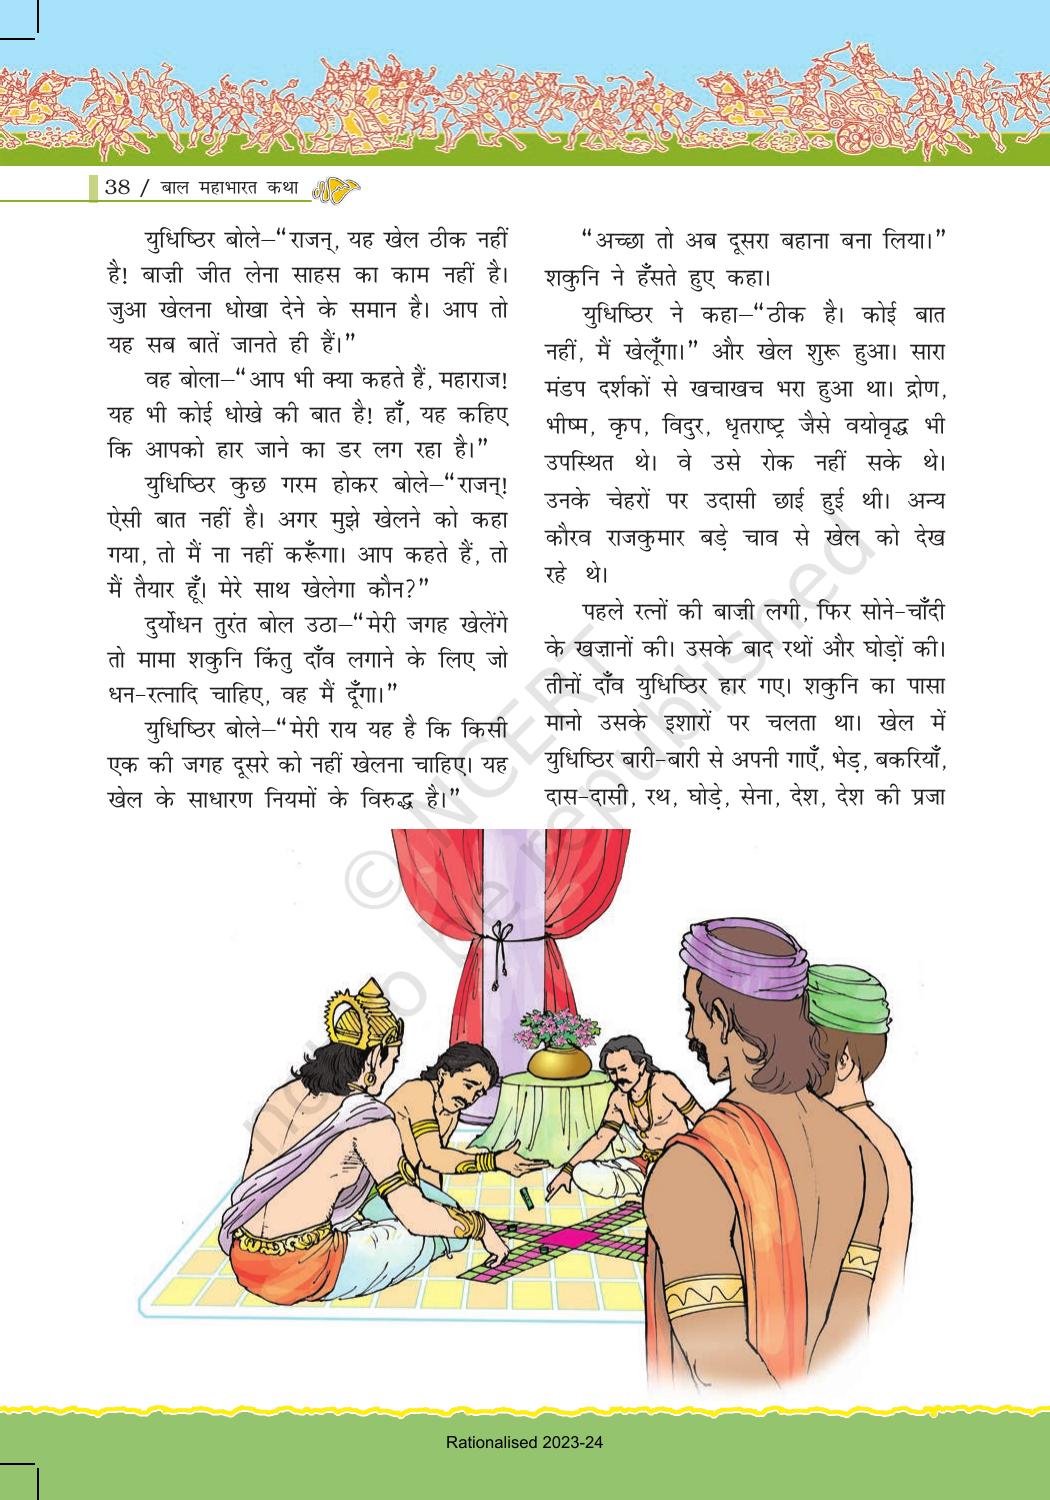 NCERT Book for Class 7 Hindi: Chapter 1-बाल महाभारत कथा - Page 38